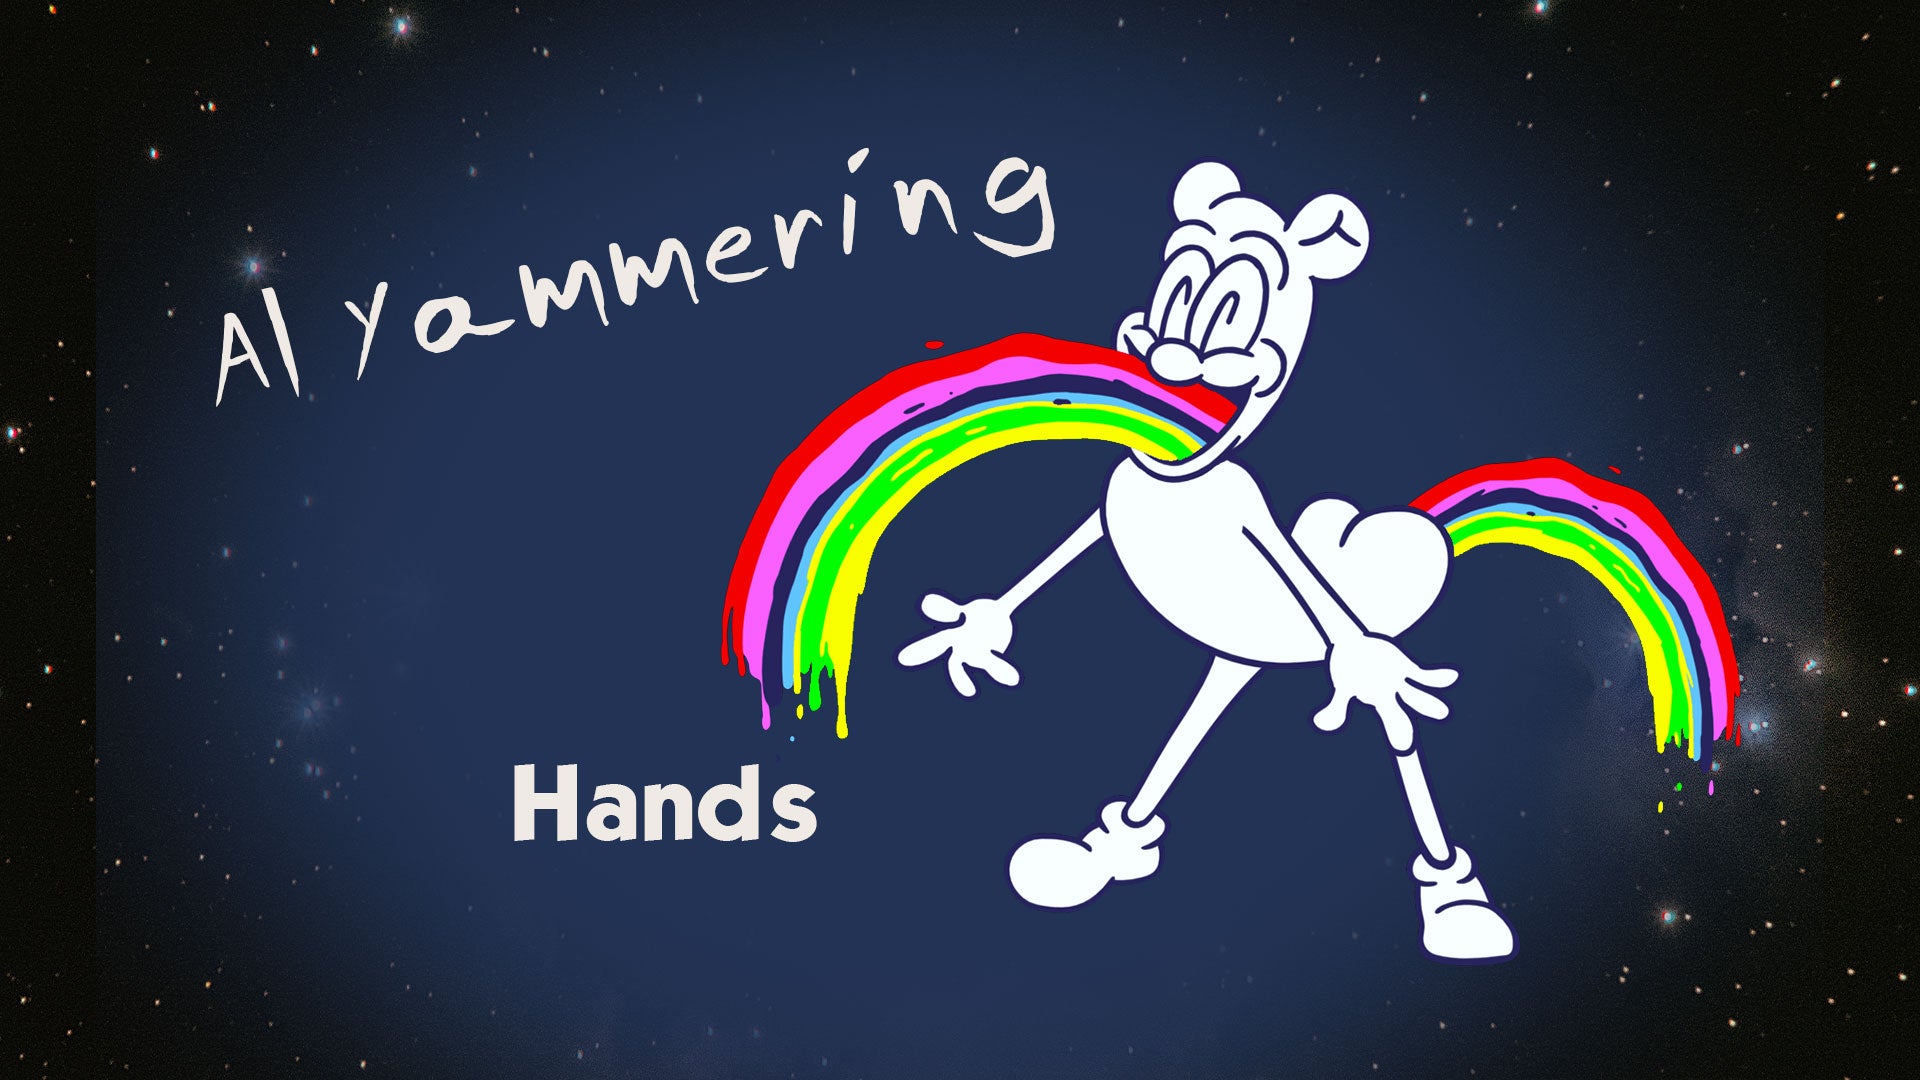 Al Yammering - Hands